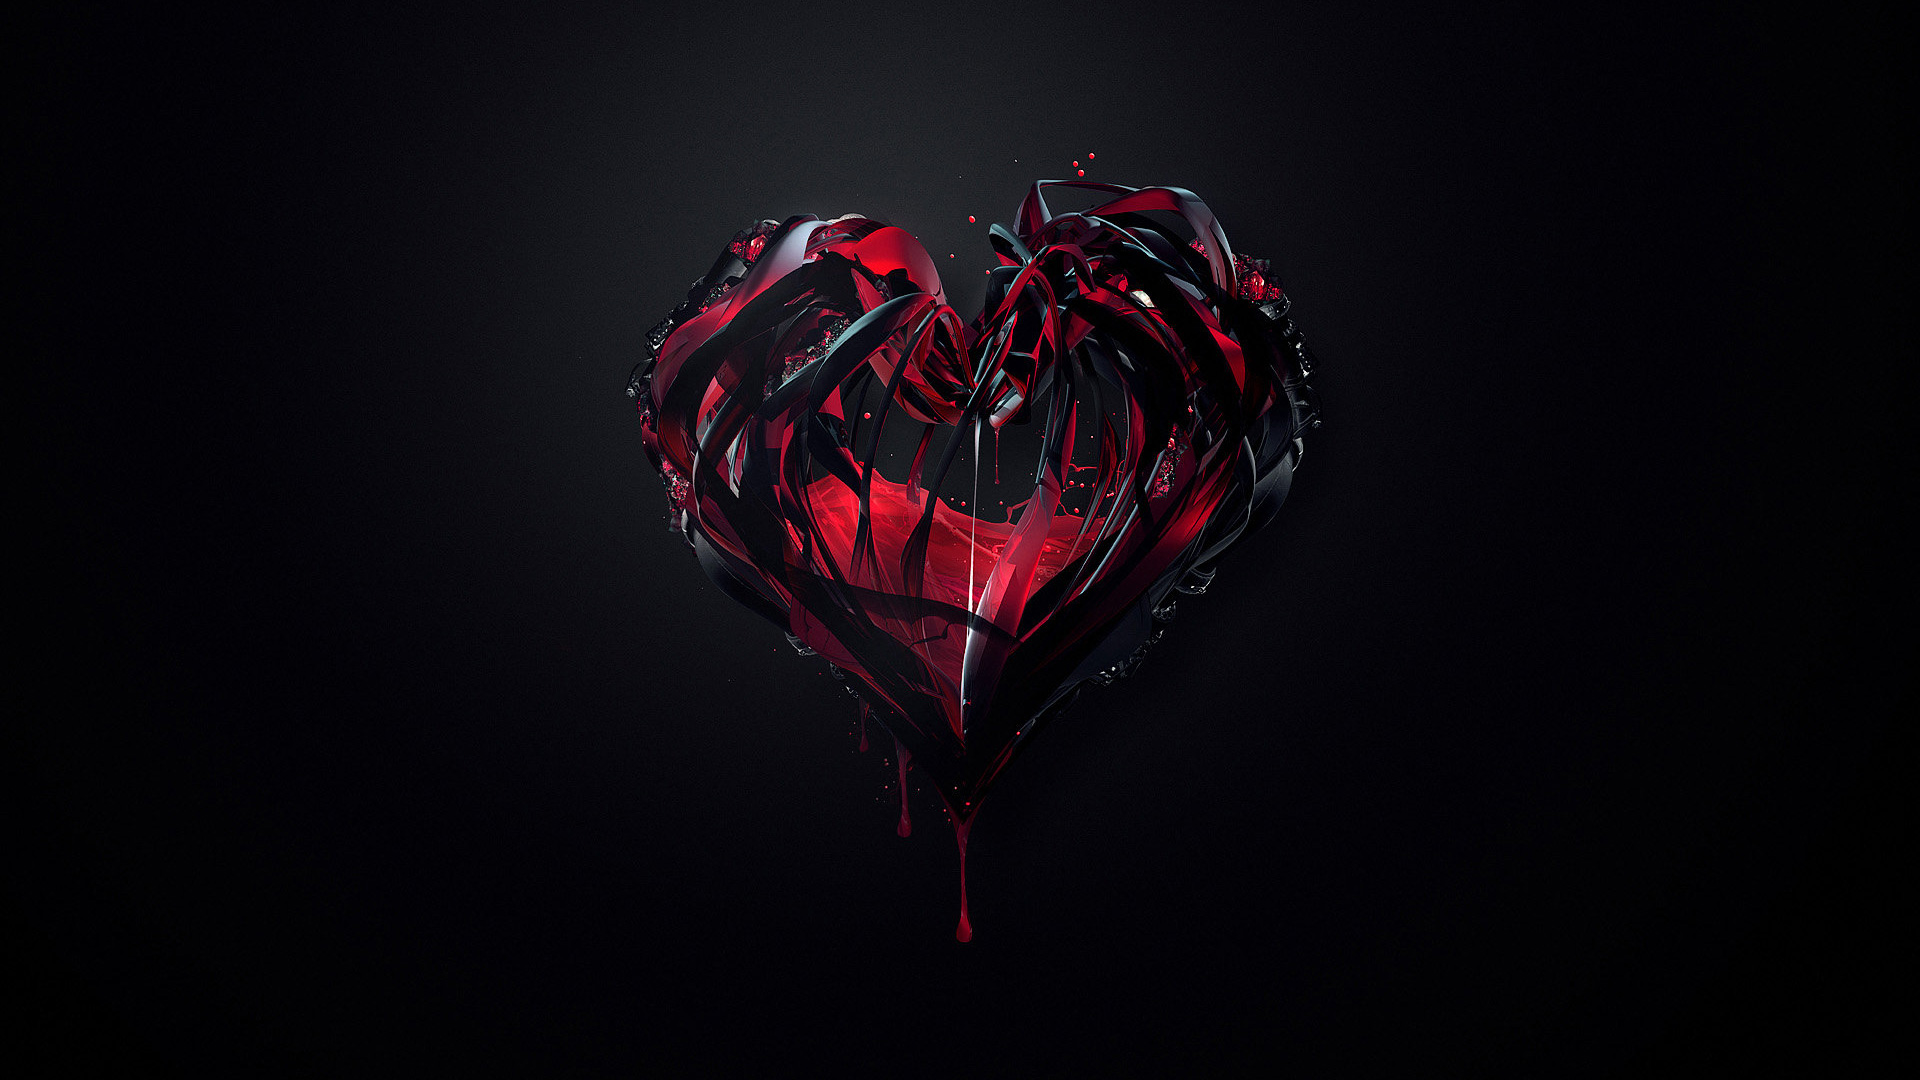 Red Hearts Black Background - WallpaperSafari